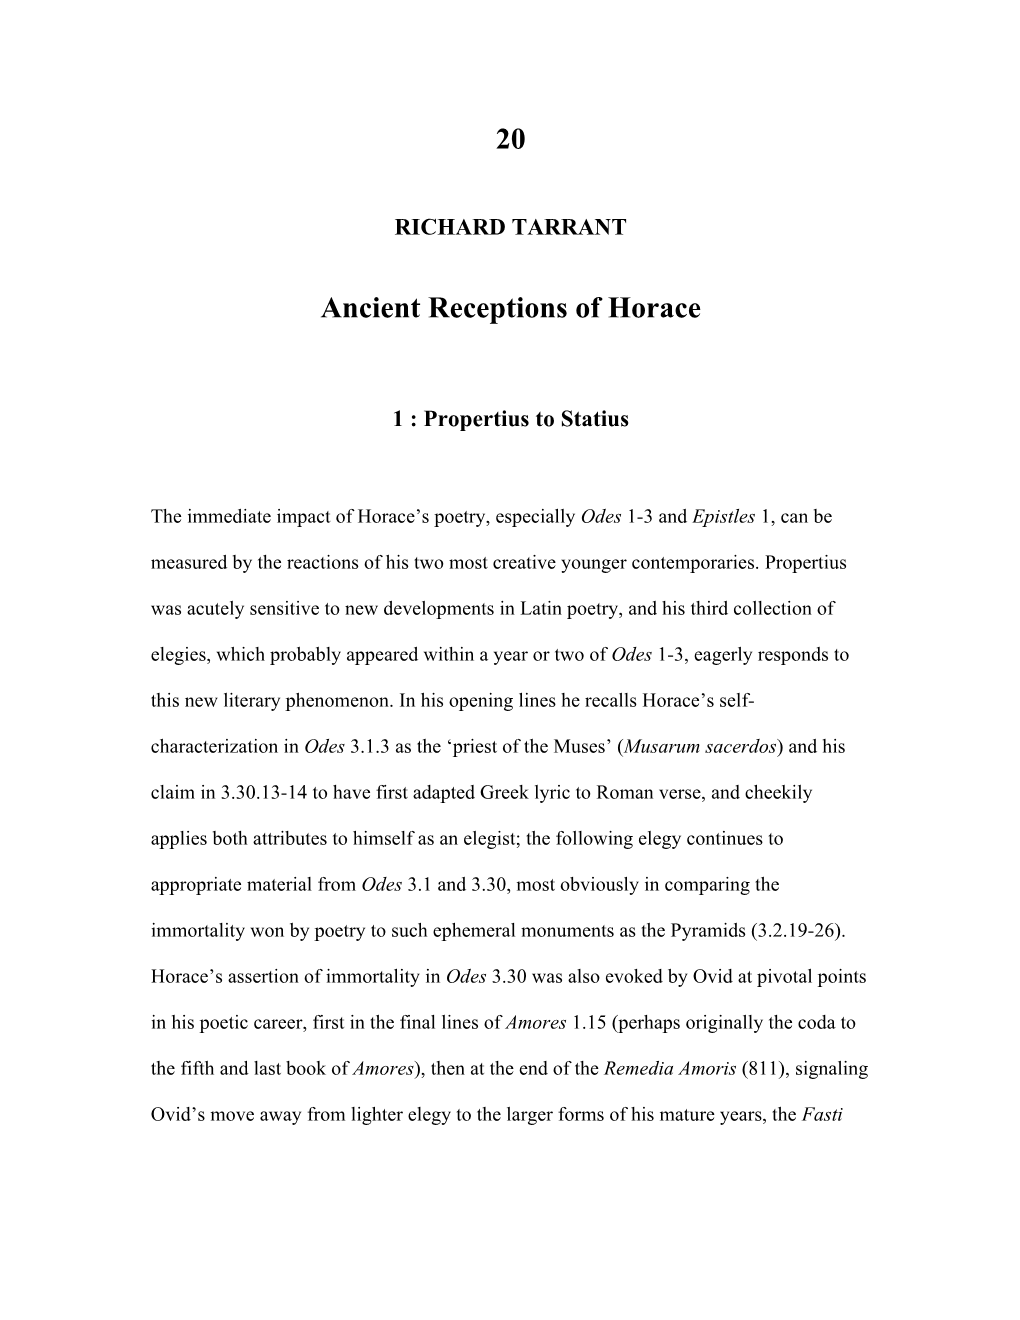 Horace in Roman Literary History